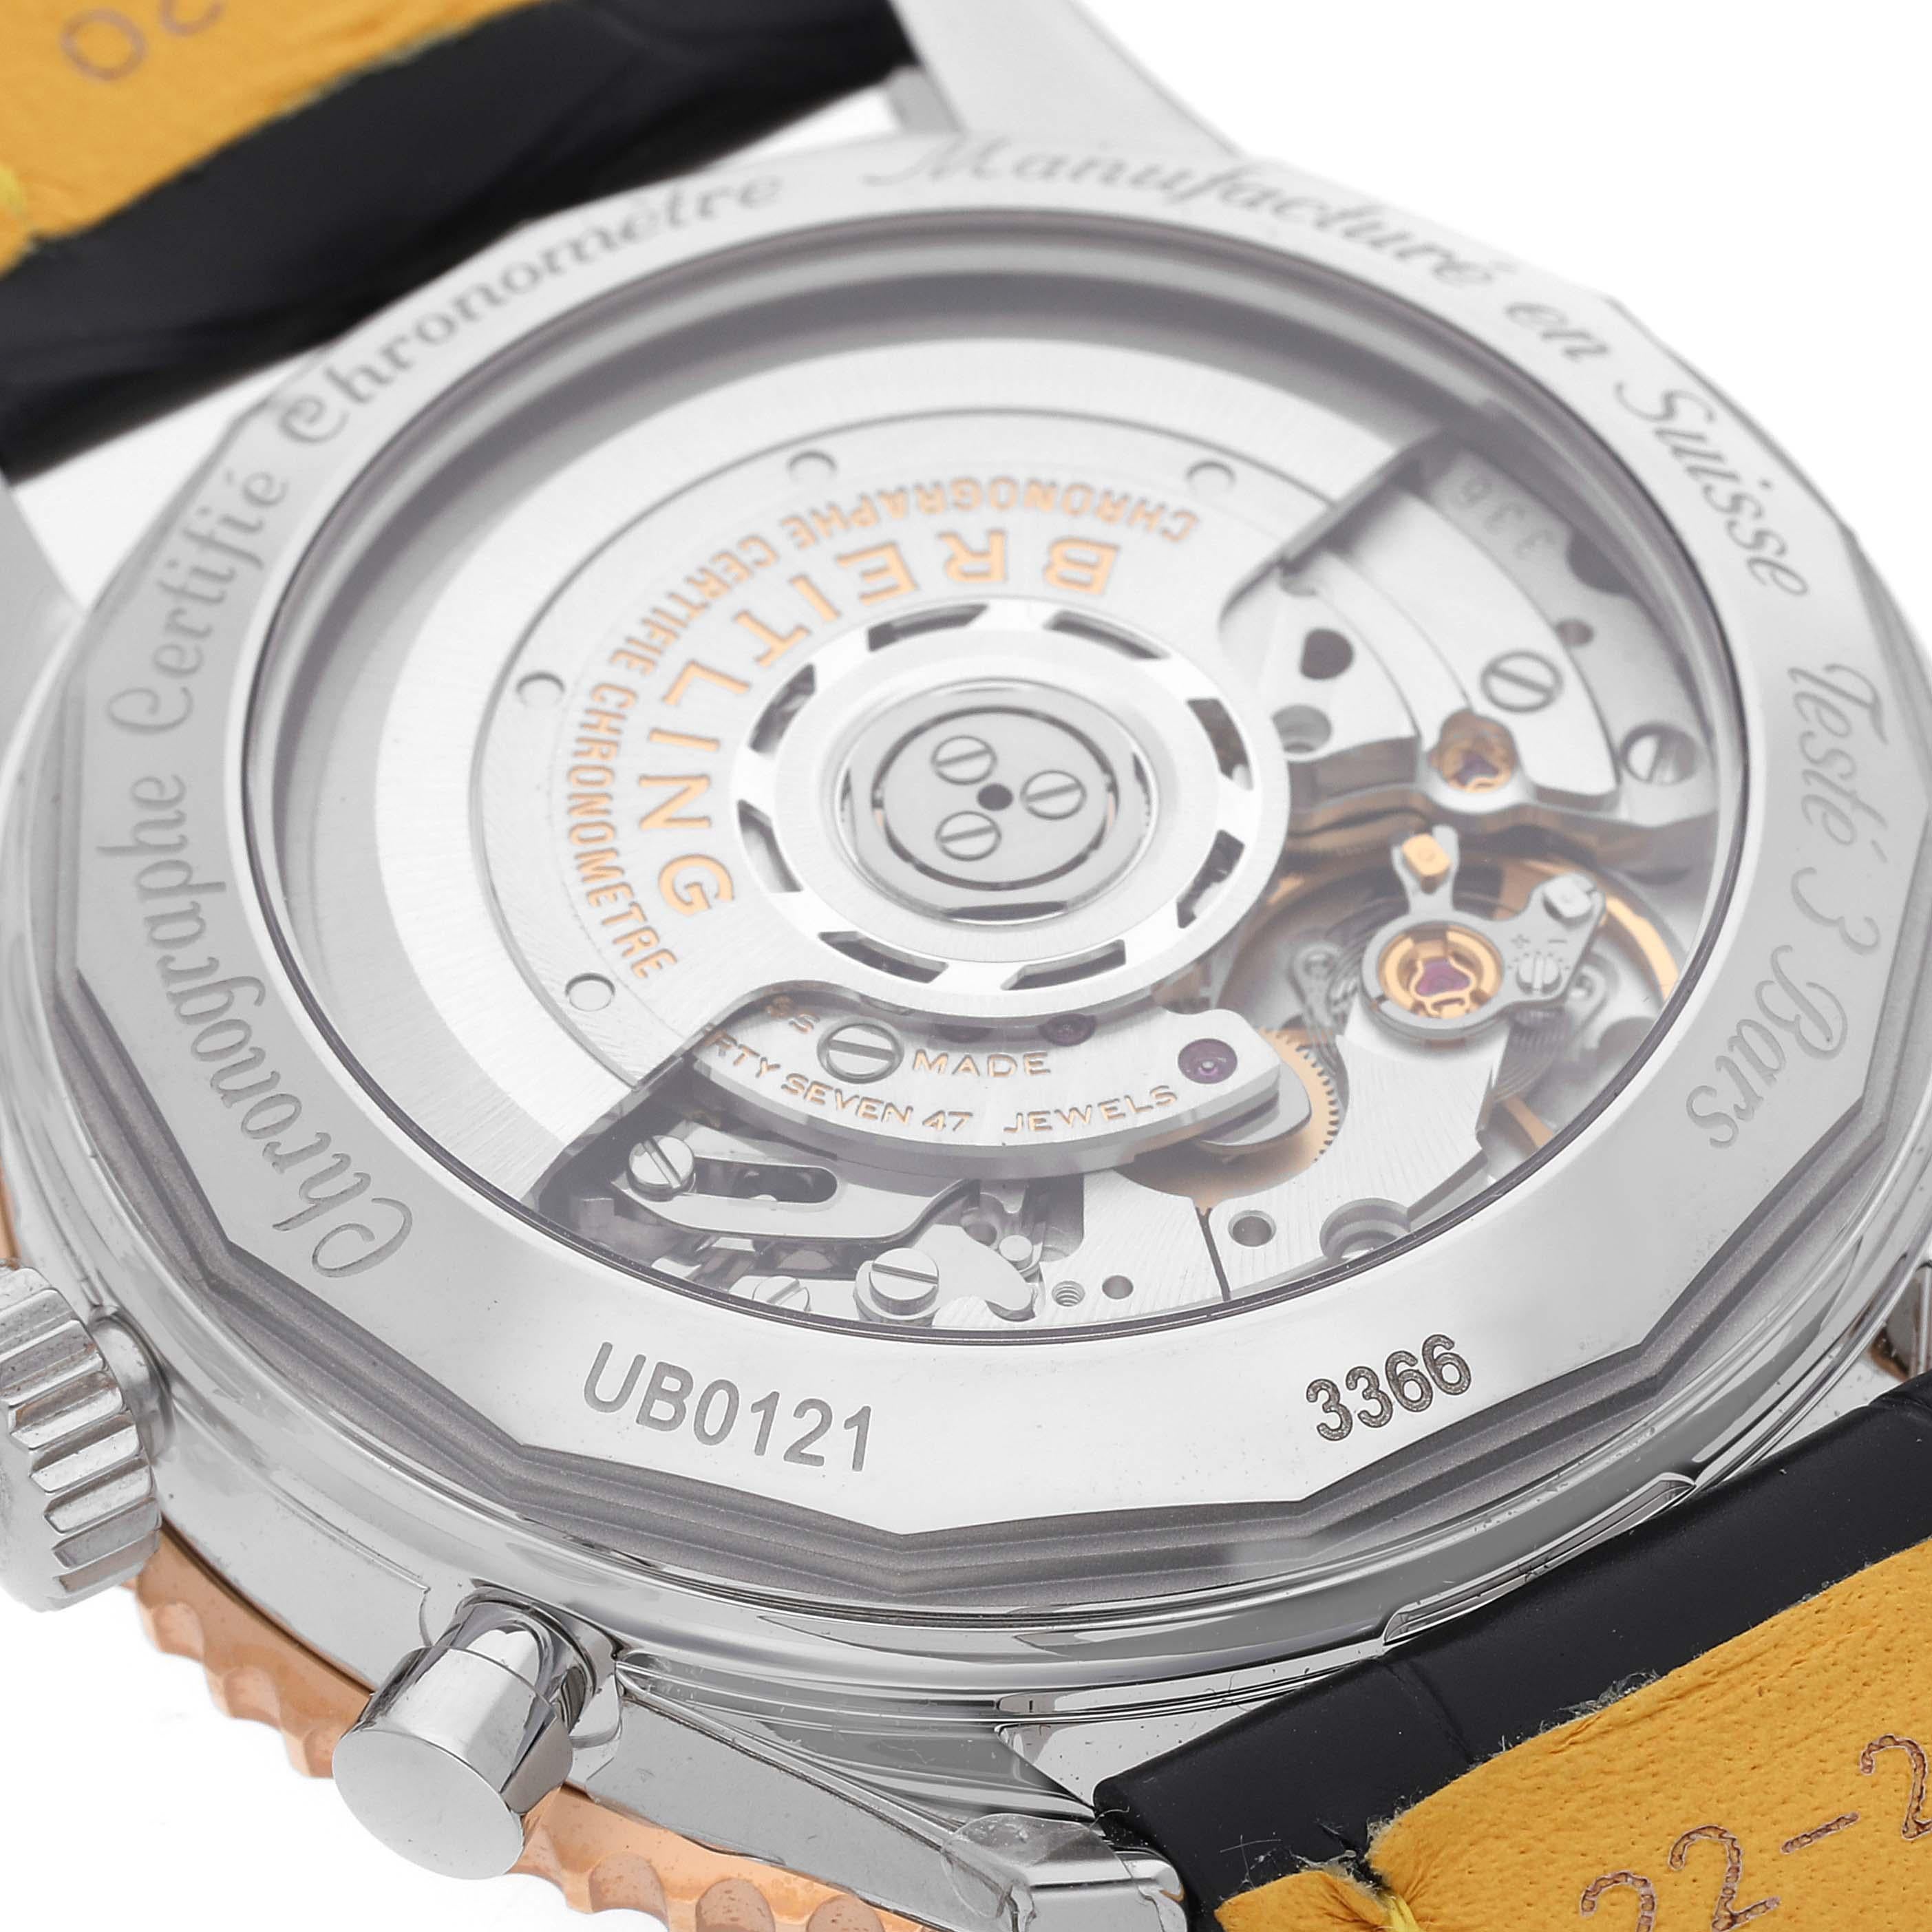 Breitling Navitimer 01 Grey Dial Steel Rose Gold Mens Watch UB0121 Unworn For Sale 2